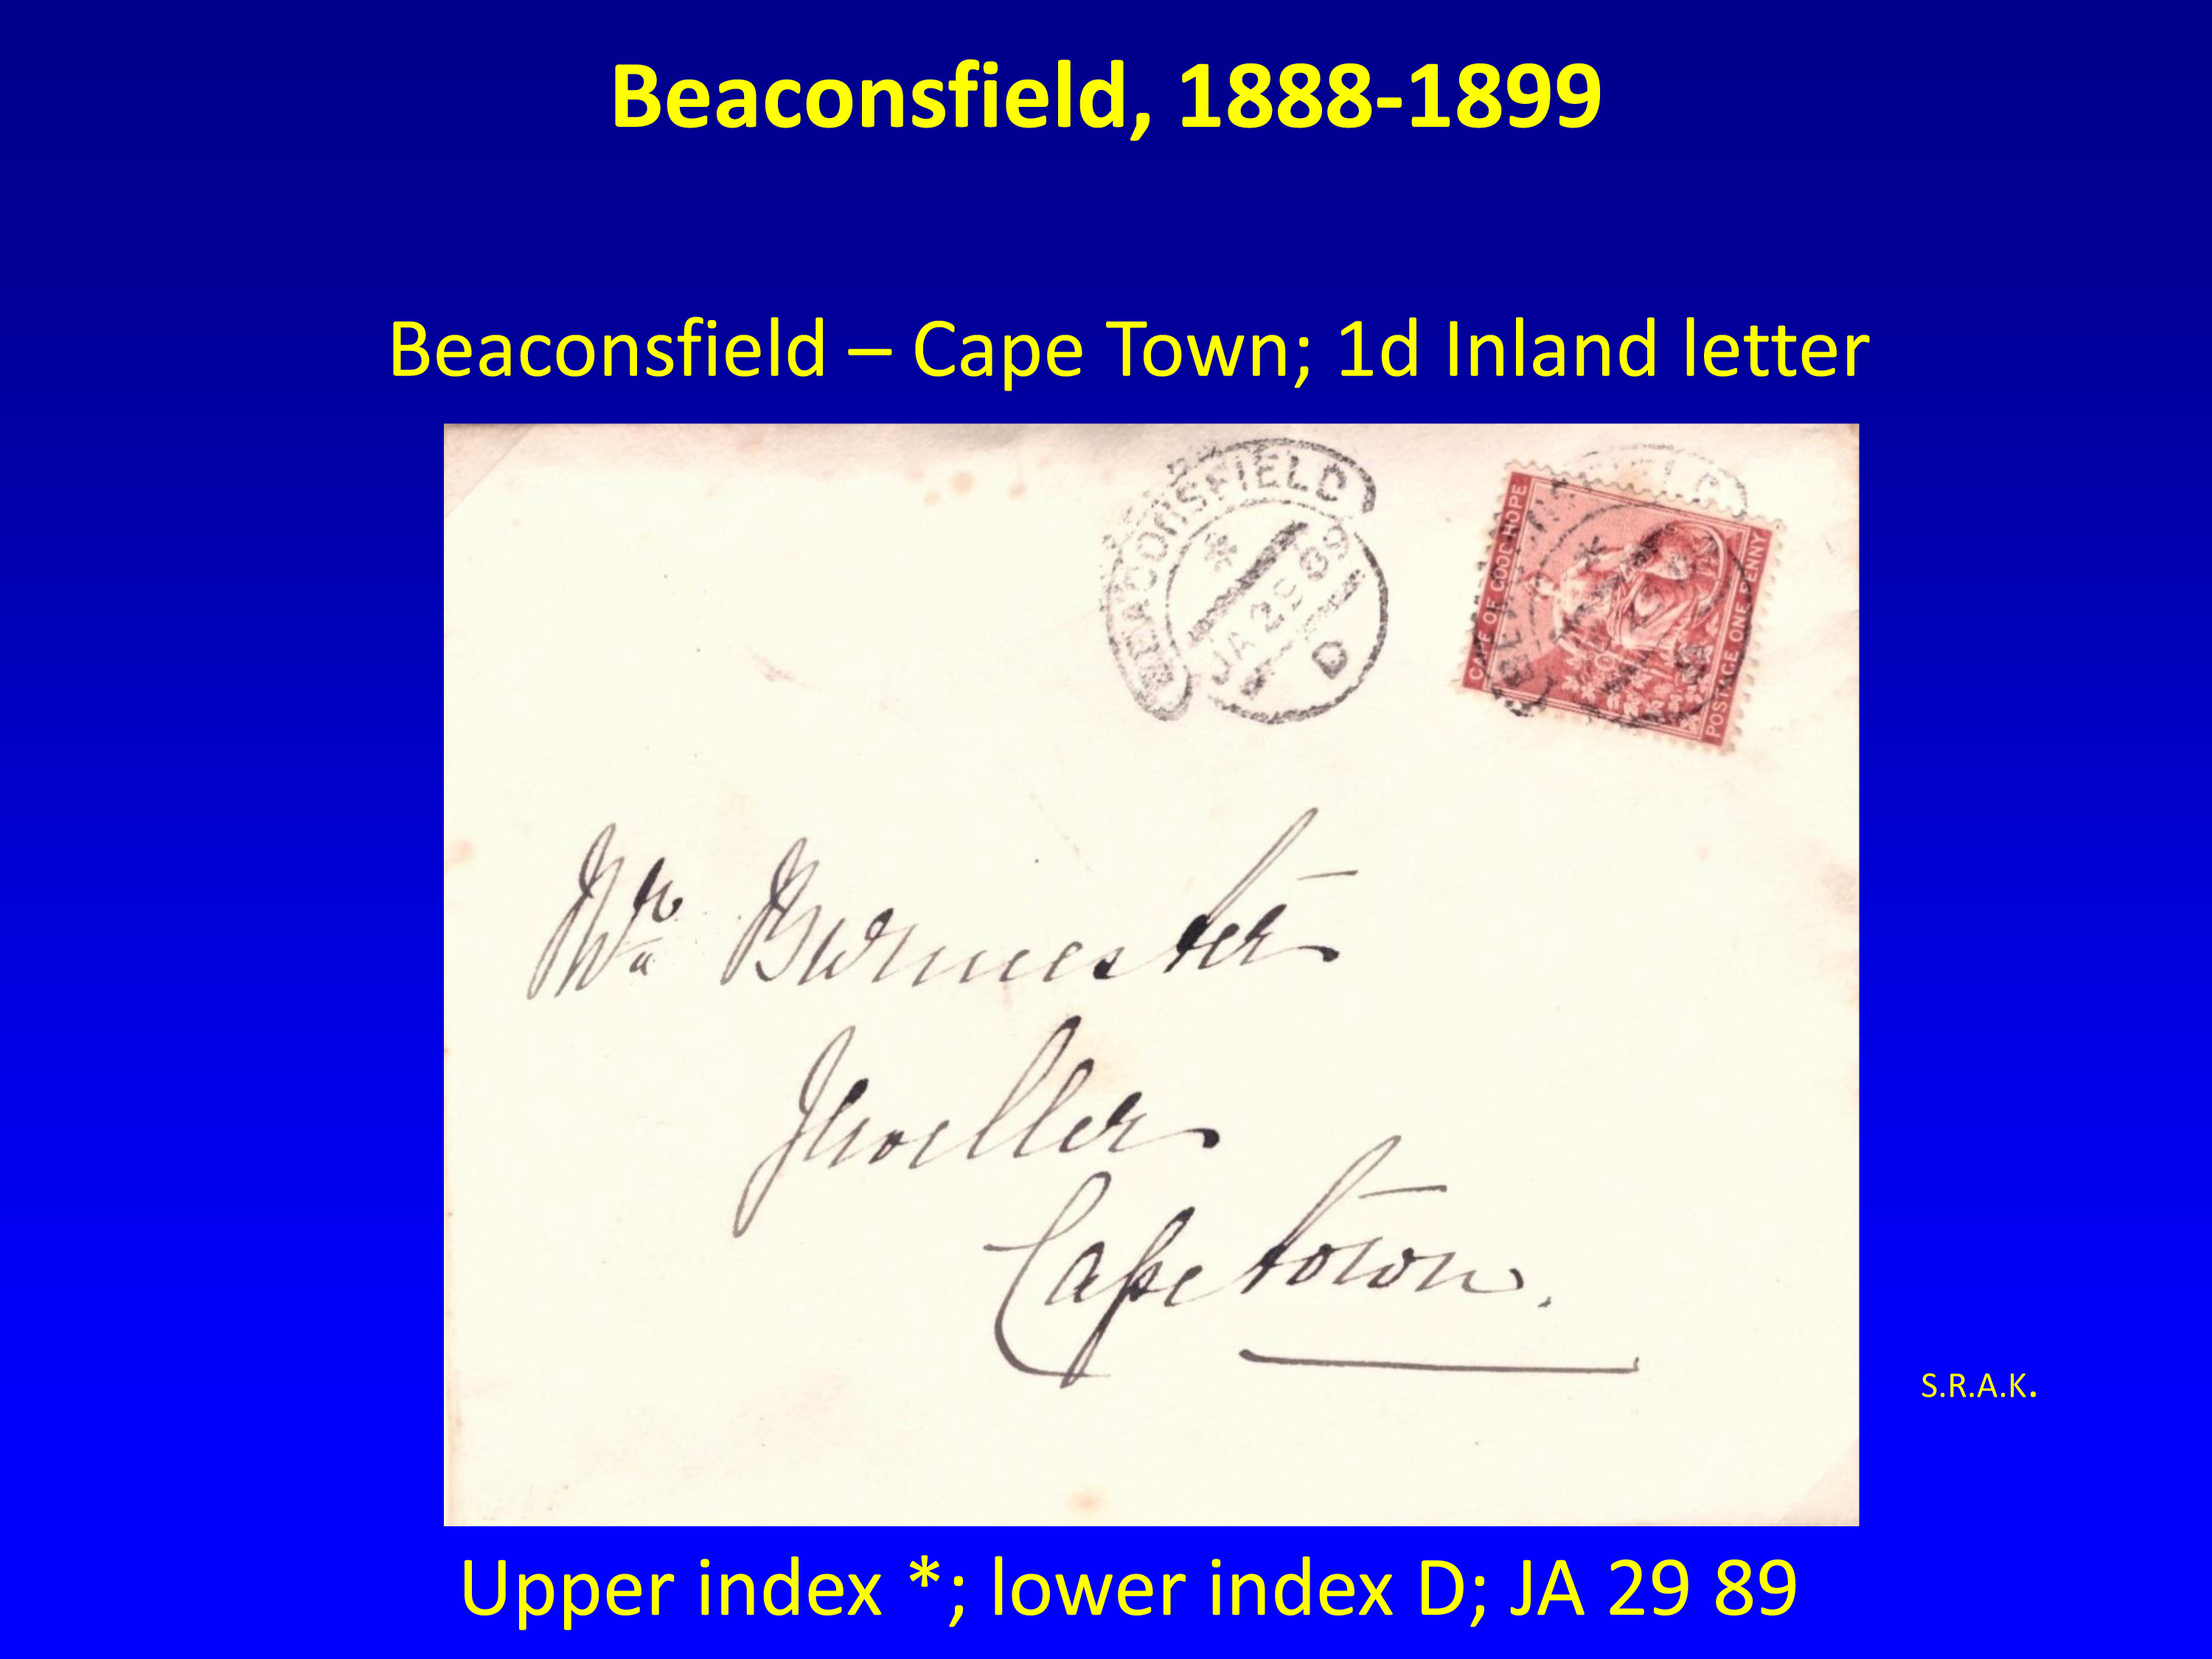 Hooded-Postmarks-of-southern-Africa-22.jpg